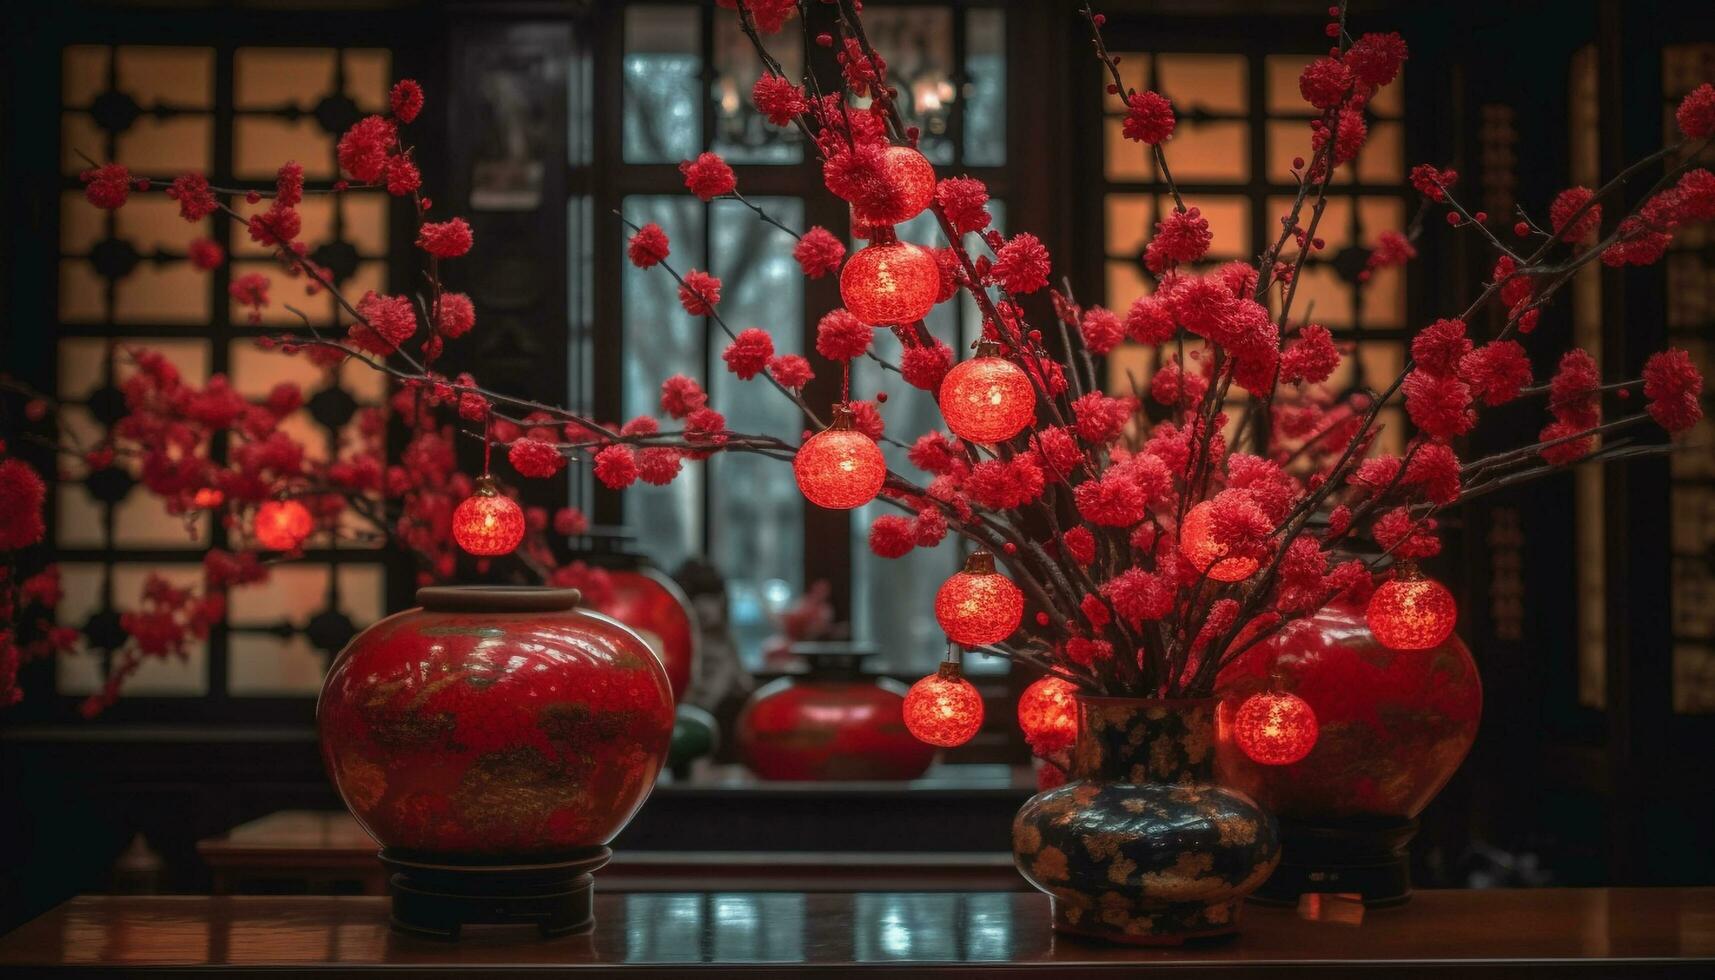 Ornate lantern illuminates traditional winter celebration with Chinese culture decor generated by AI photo